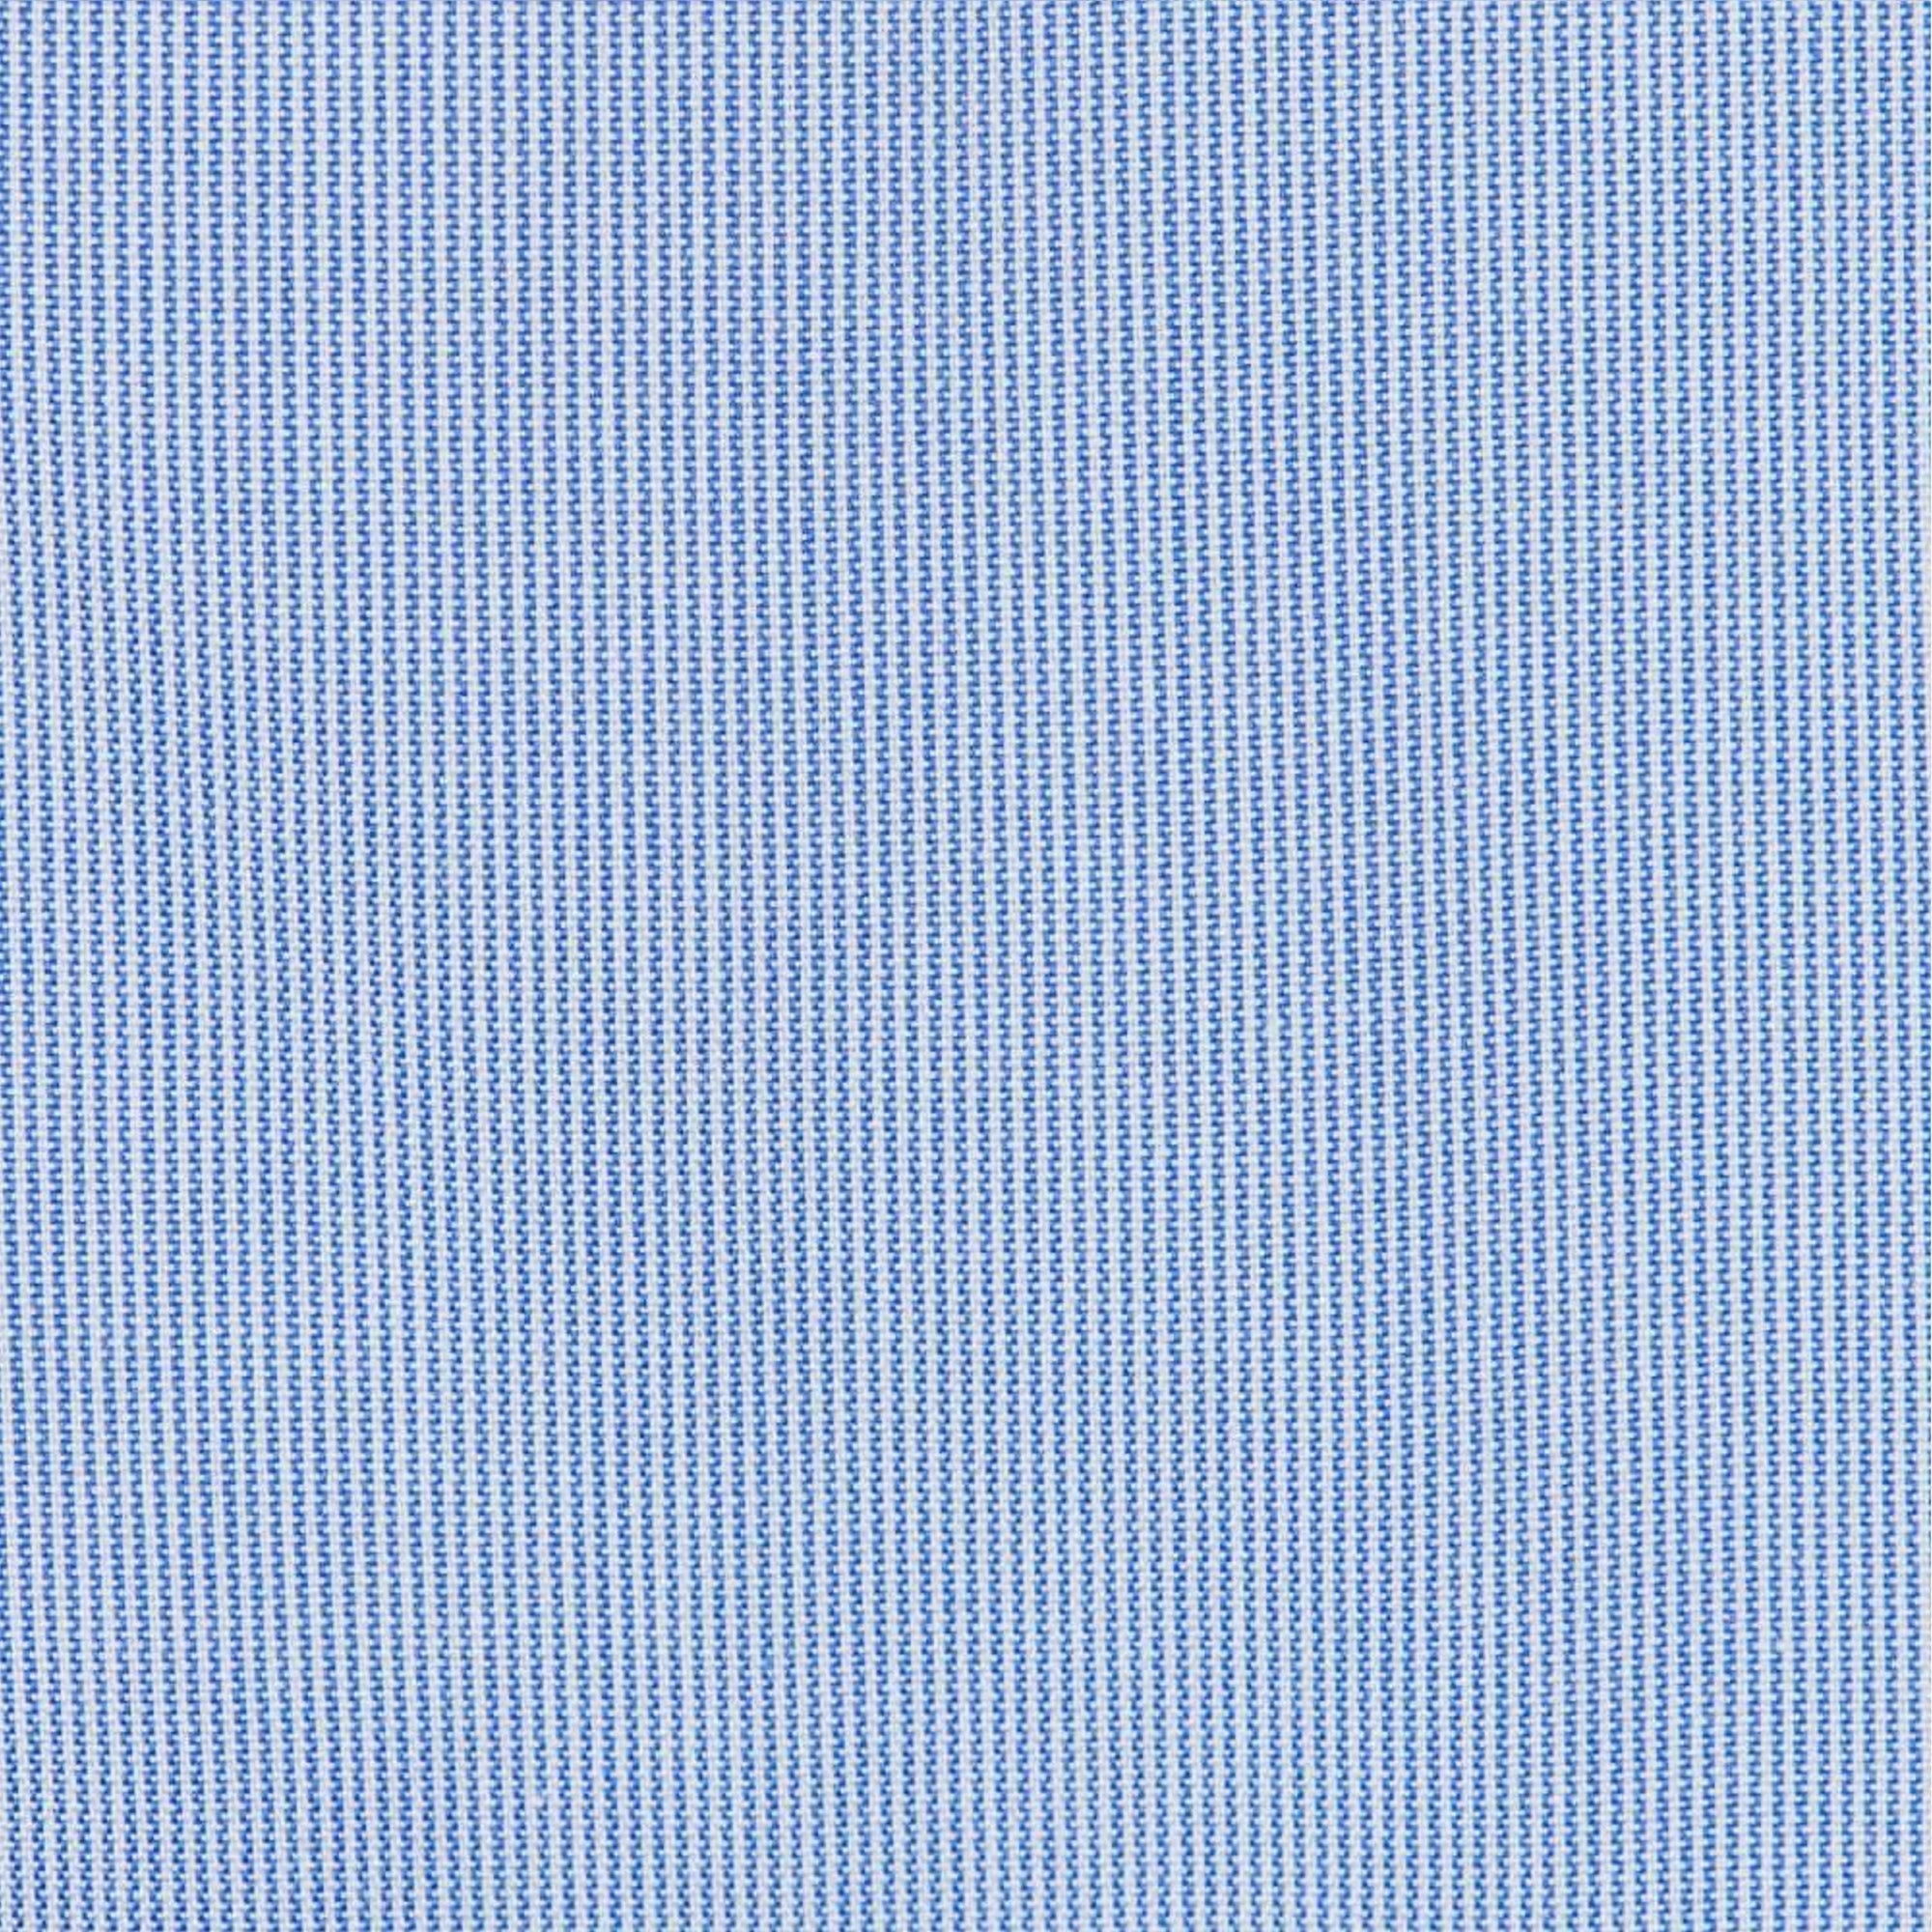 The Princeton - Wrinkle-Free Fine Line Stripe Cotton Dress Shirt in Blue (Size 16 - 34/35) by Cooper & Stewart